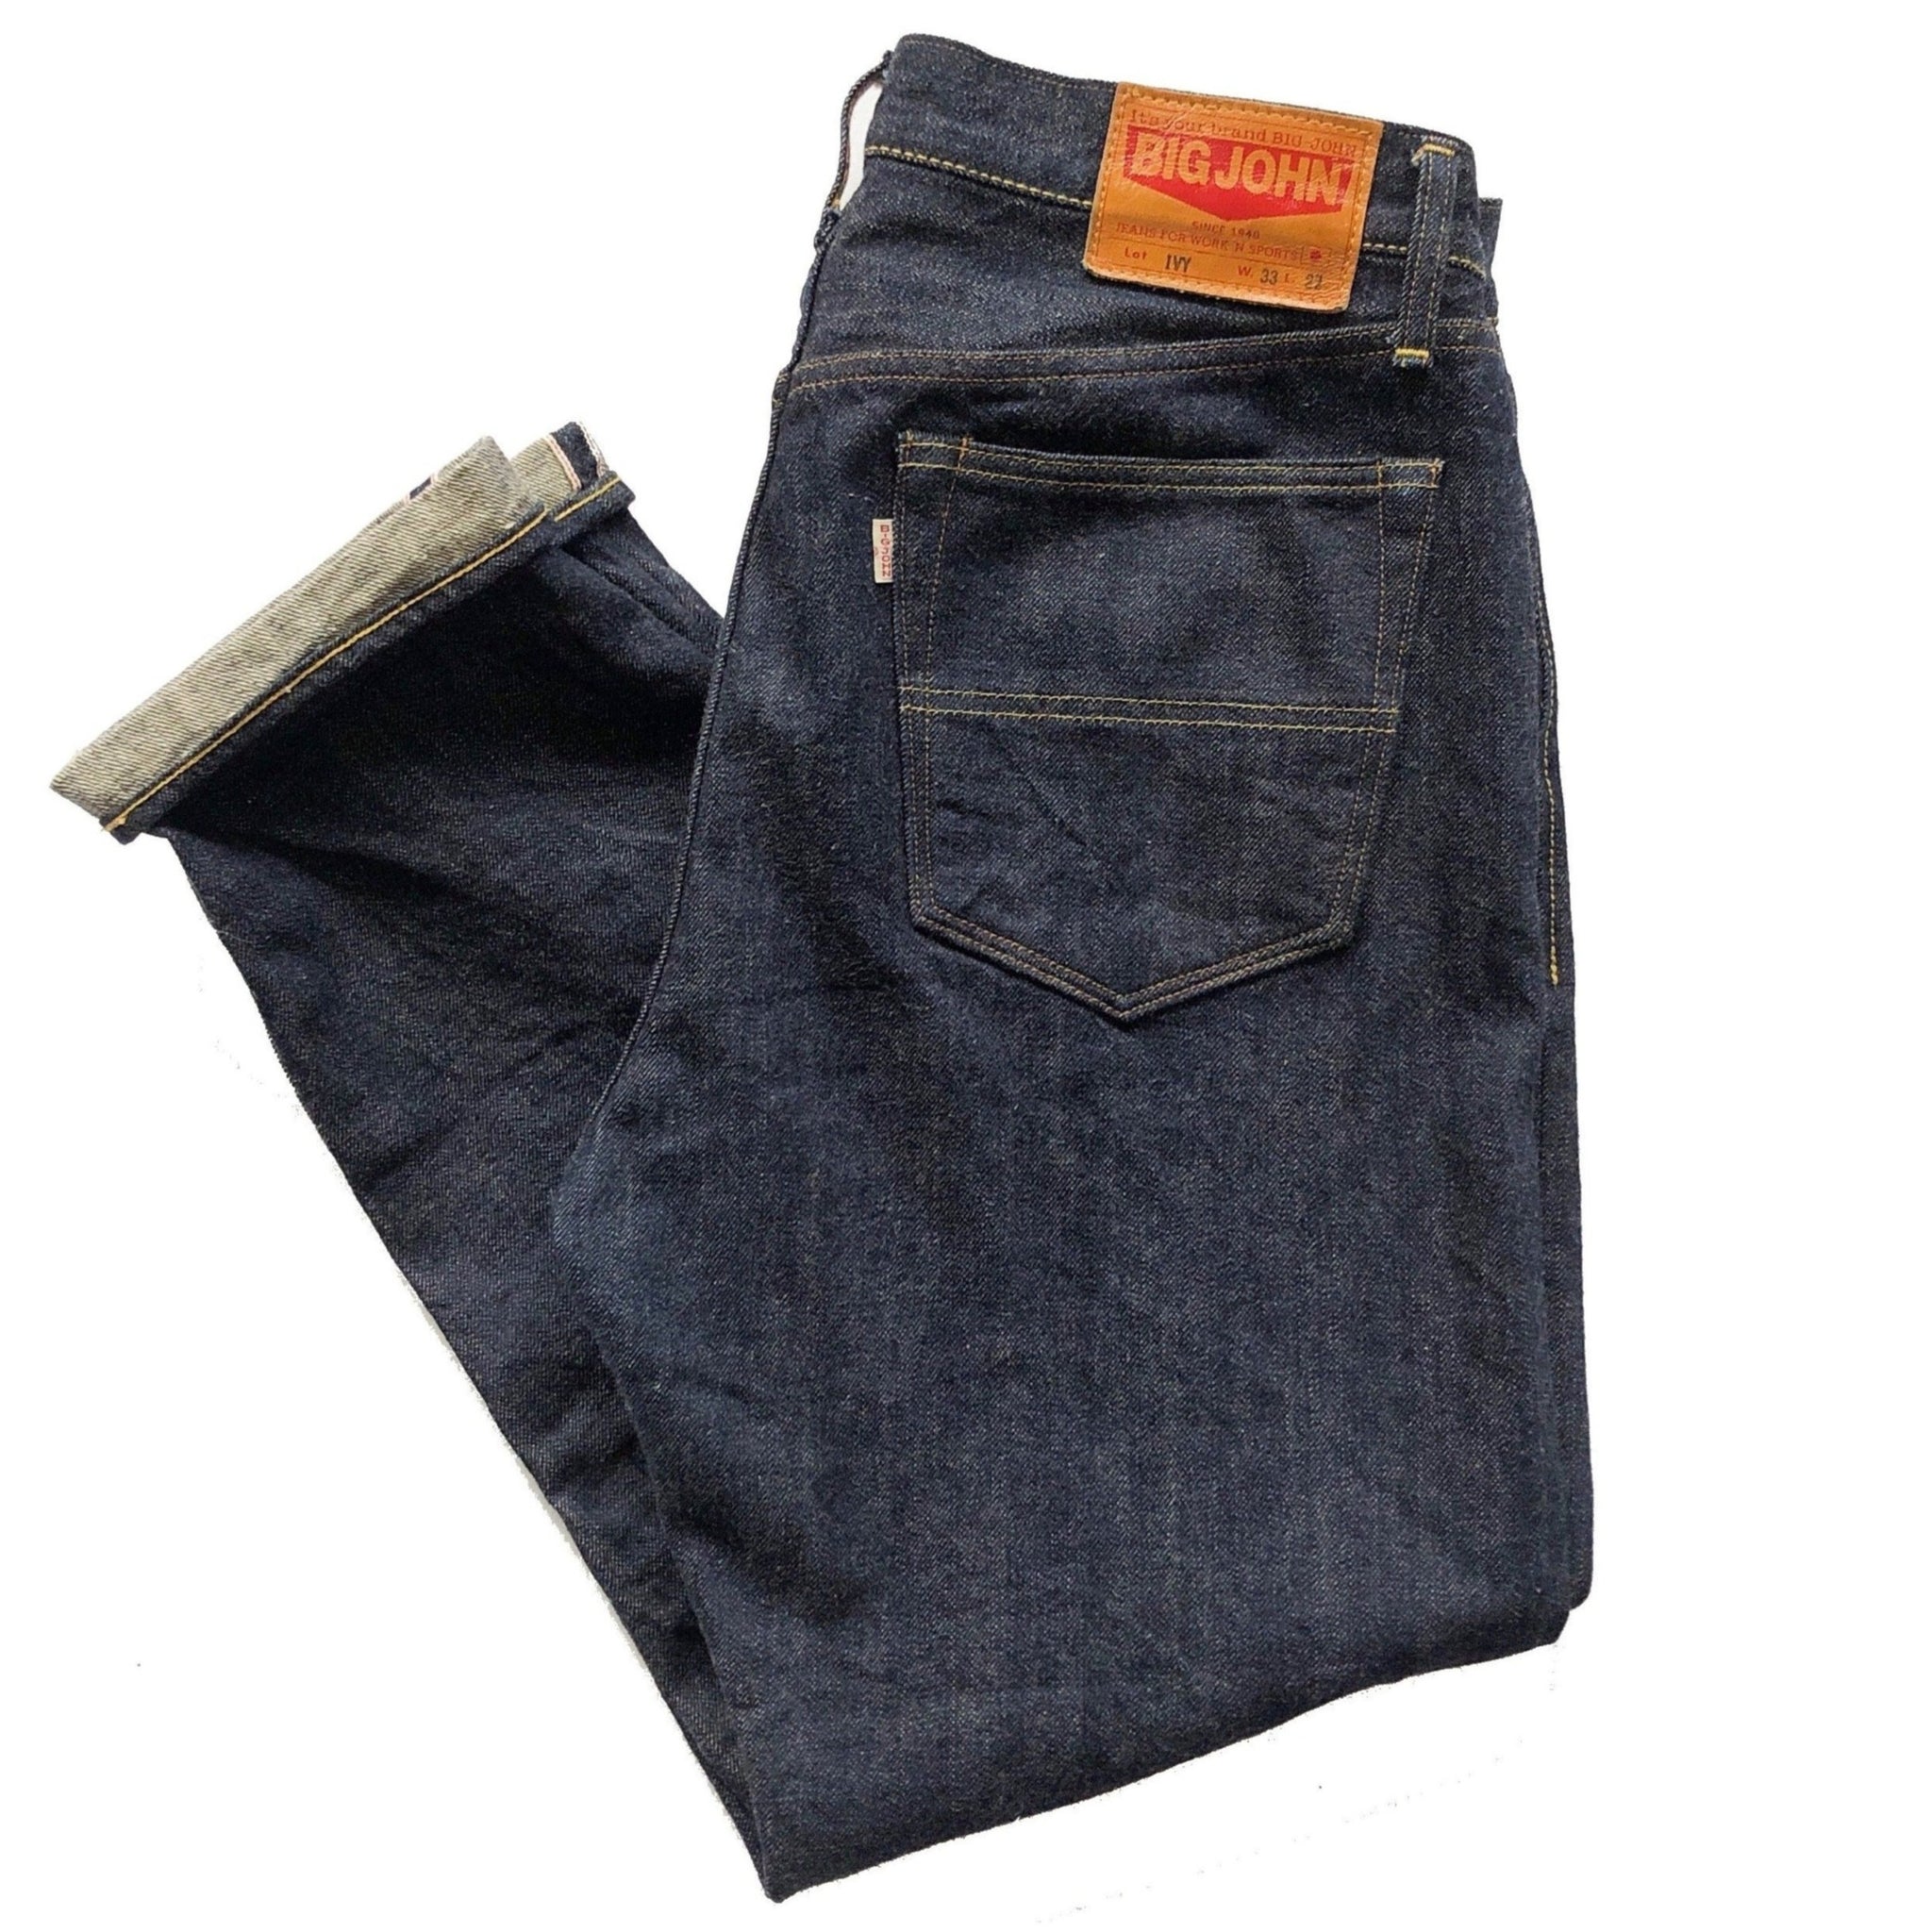 Big John “Ivy M114J” 14oz. Unsanforized Japanese Jeans (Regular Tapered) Regular price ₱9490